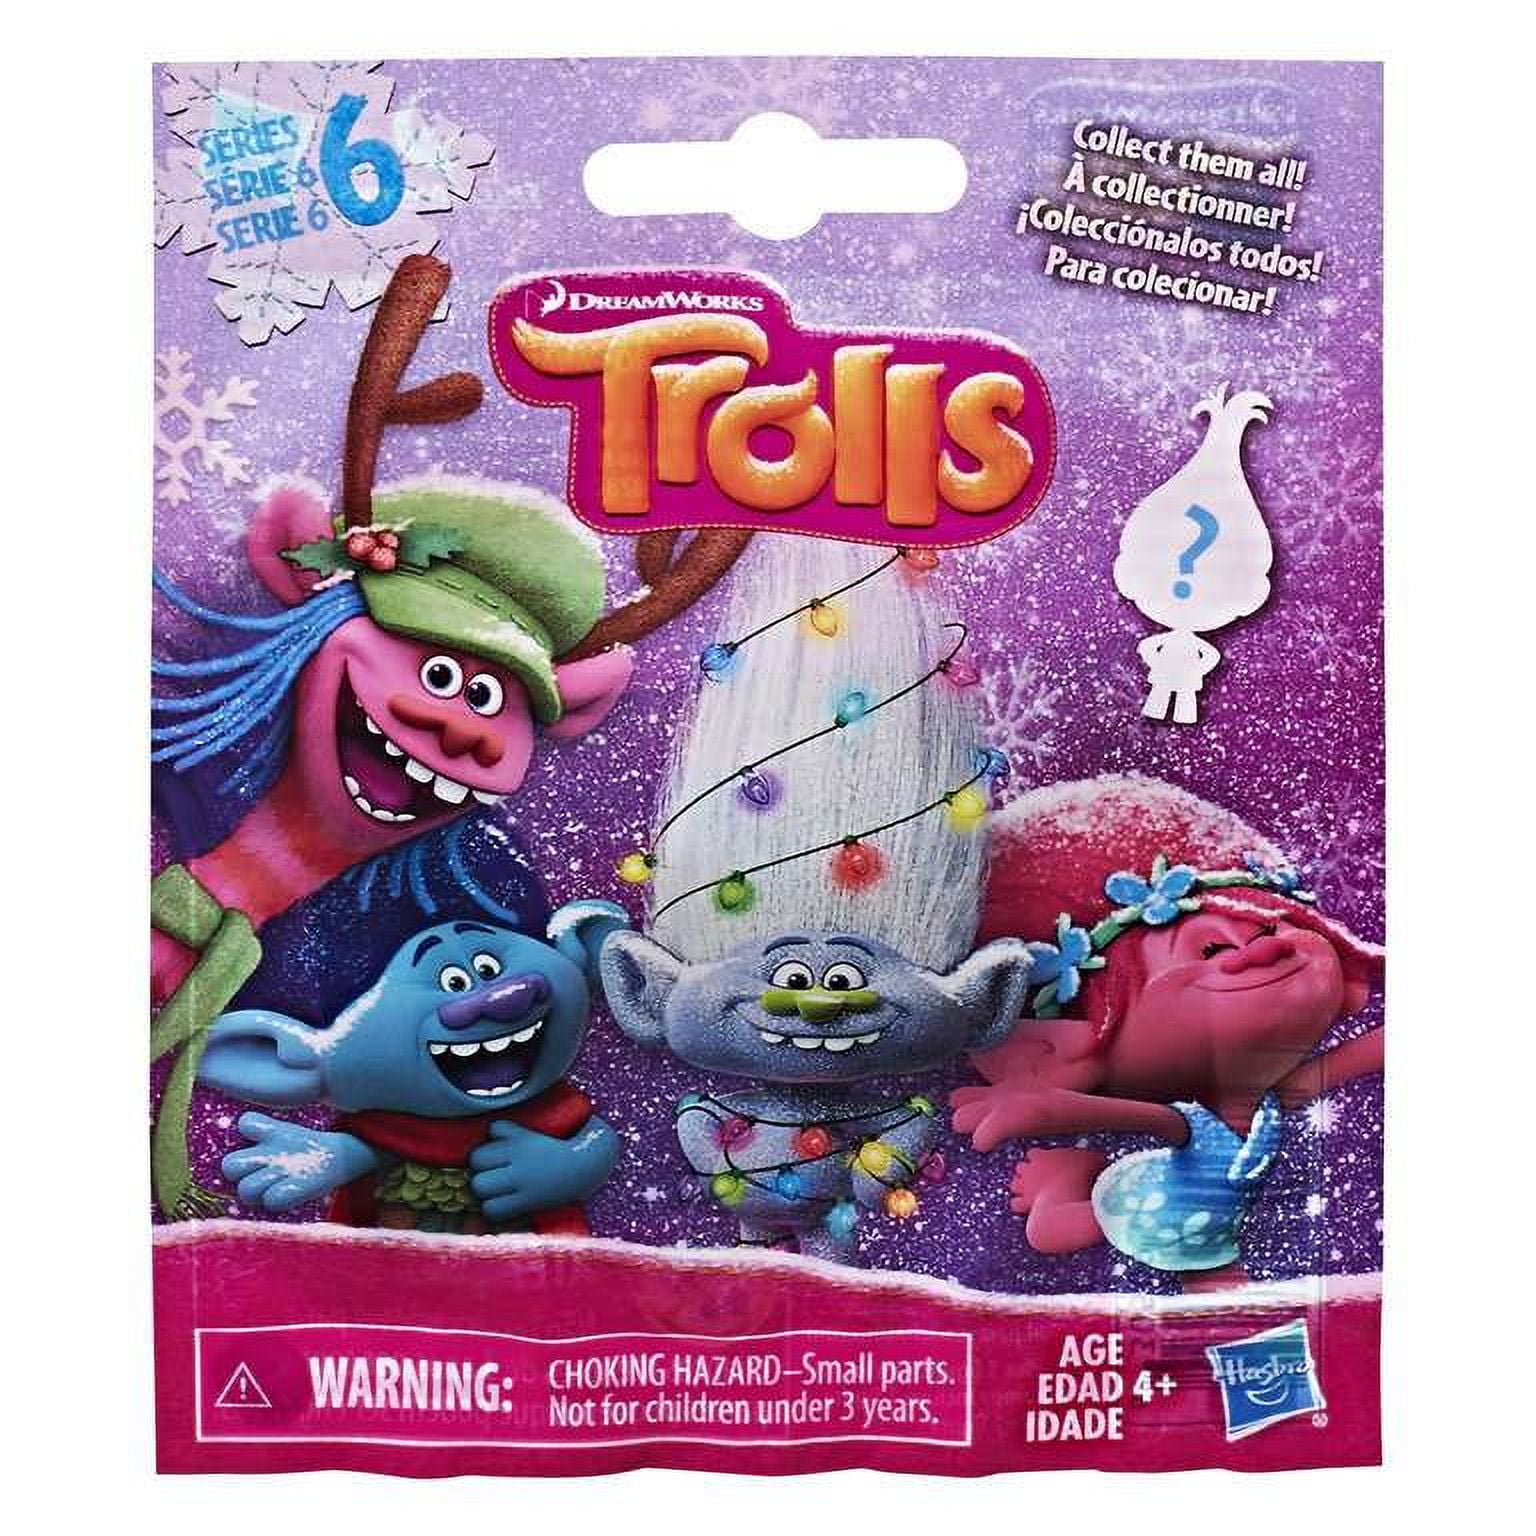 Trolls Party Favors Set - 12 PC Trolls Goodie Bag Filler Bundle with 6 Trolls Blind Bags with Trolls Mini Figurine Mystery Toys Plus 4 Trolls